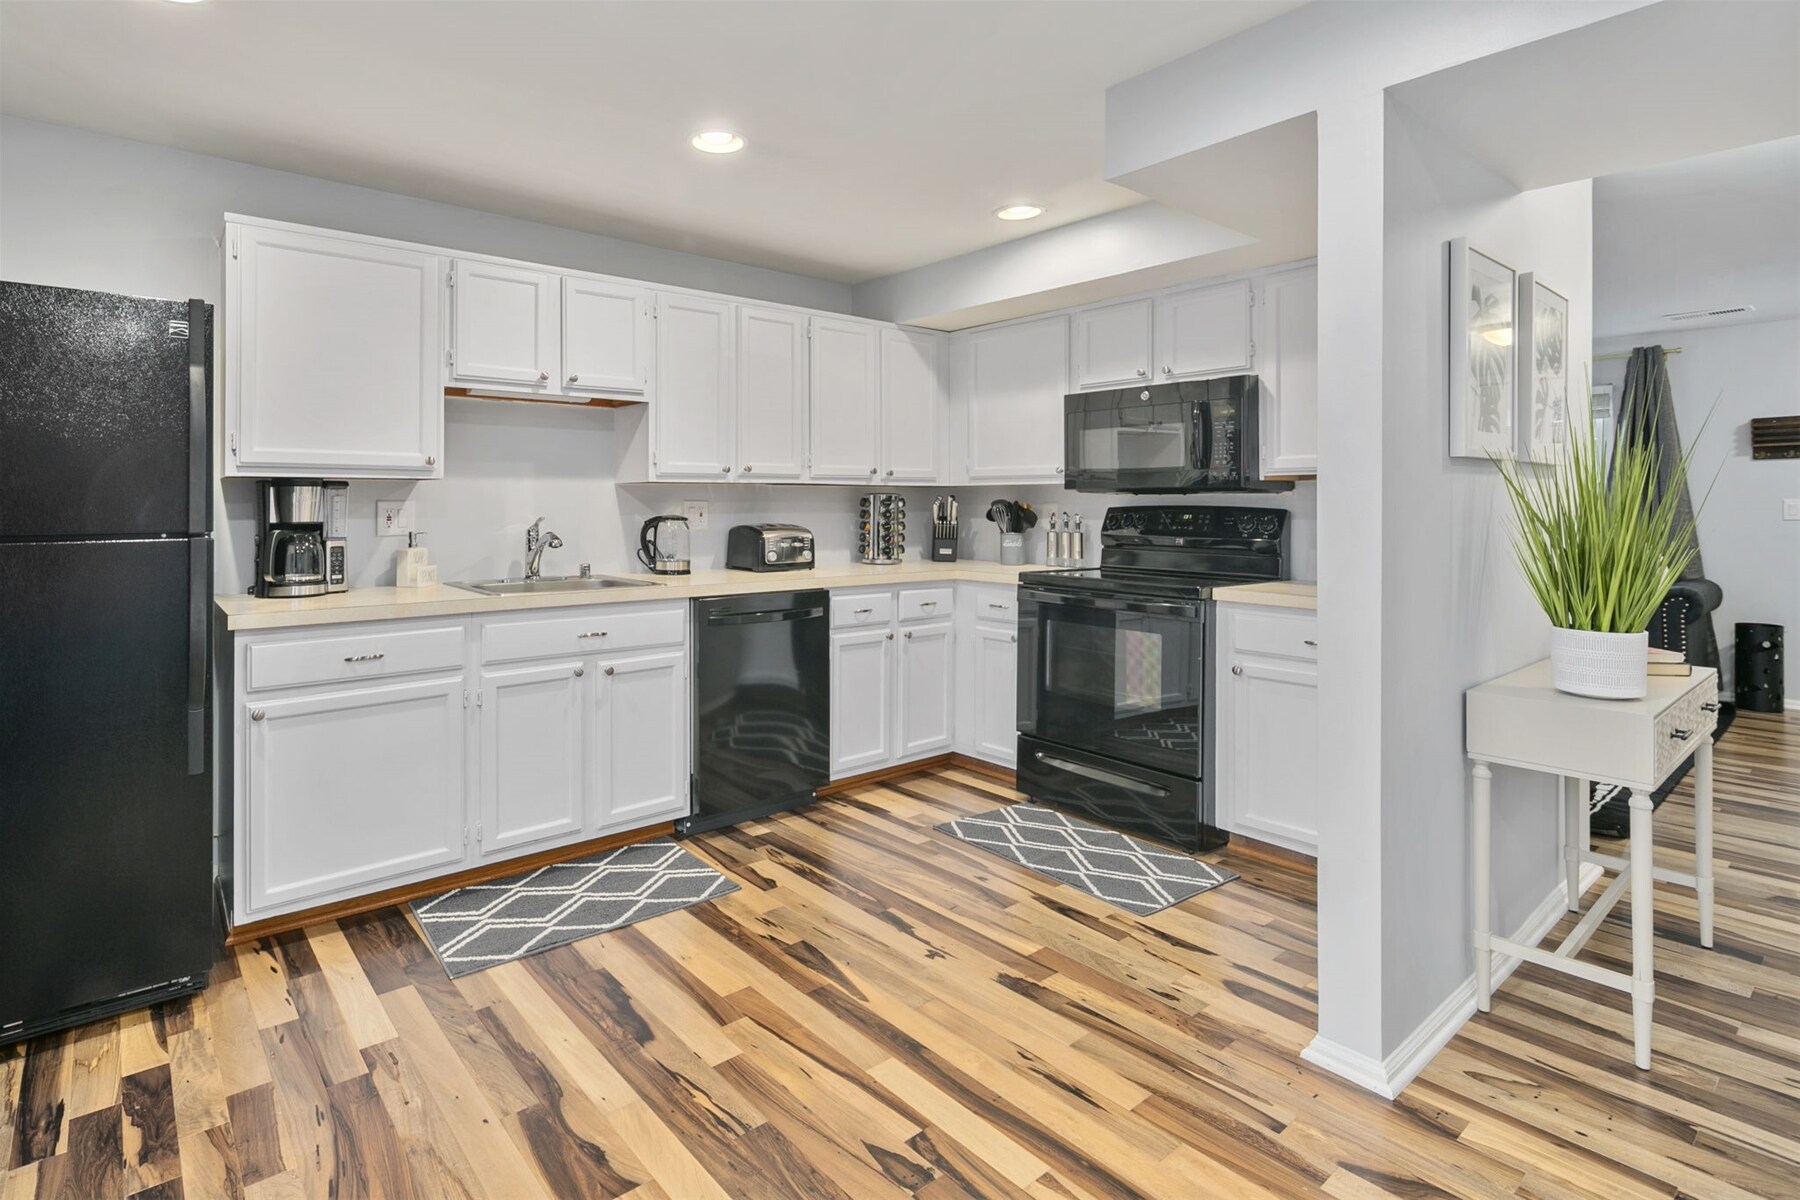 Spacious kitchen design renders optimal cooking space